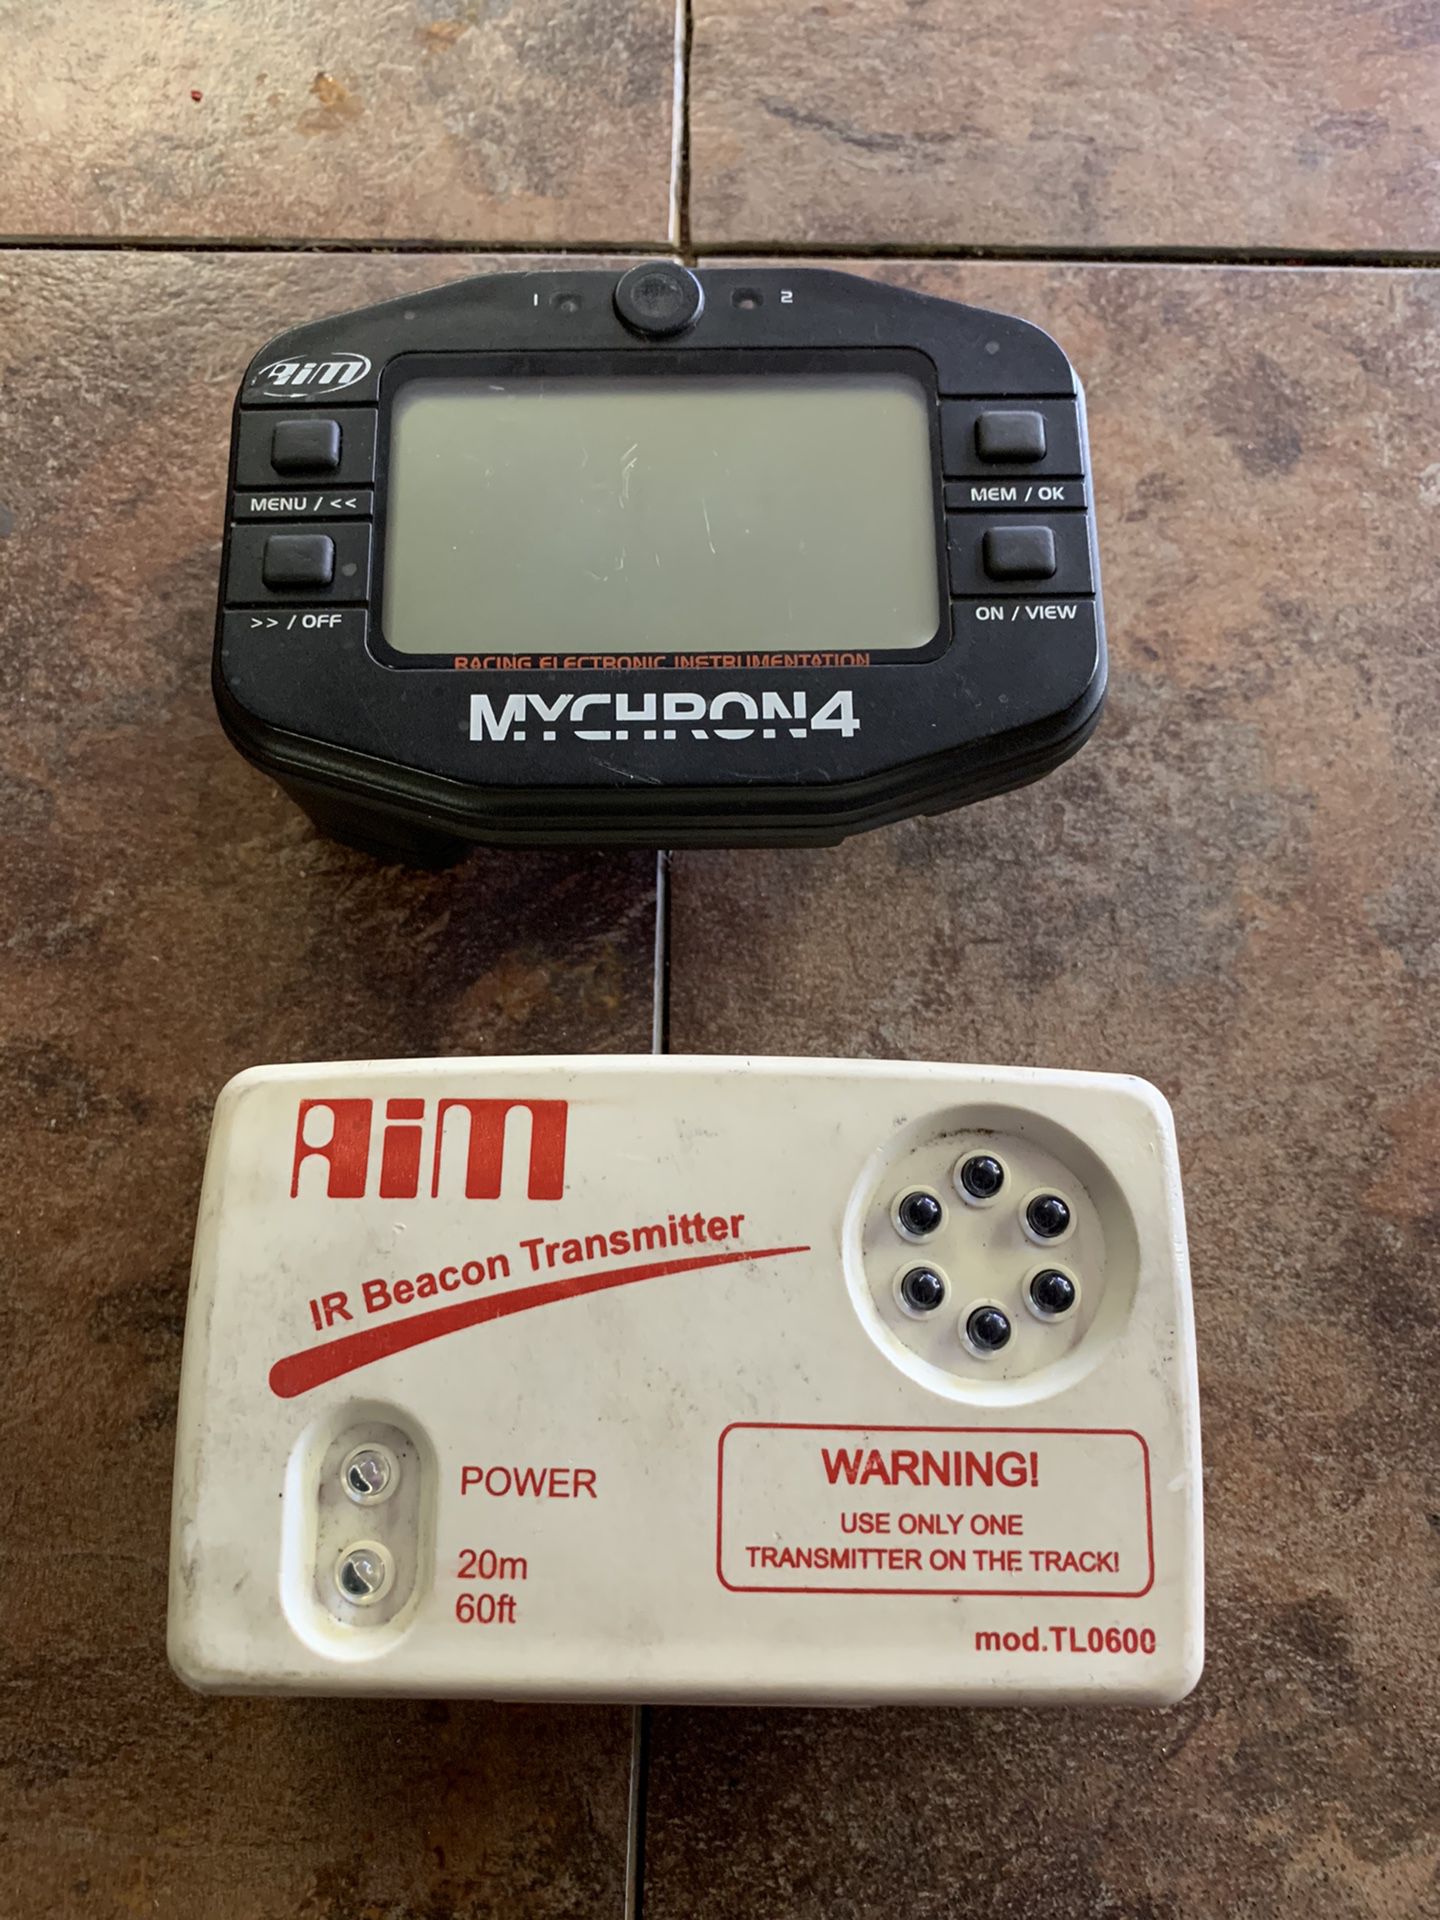 Mychron 4 with ir beacon transmitter